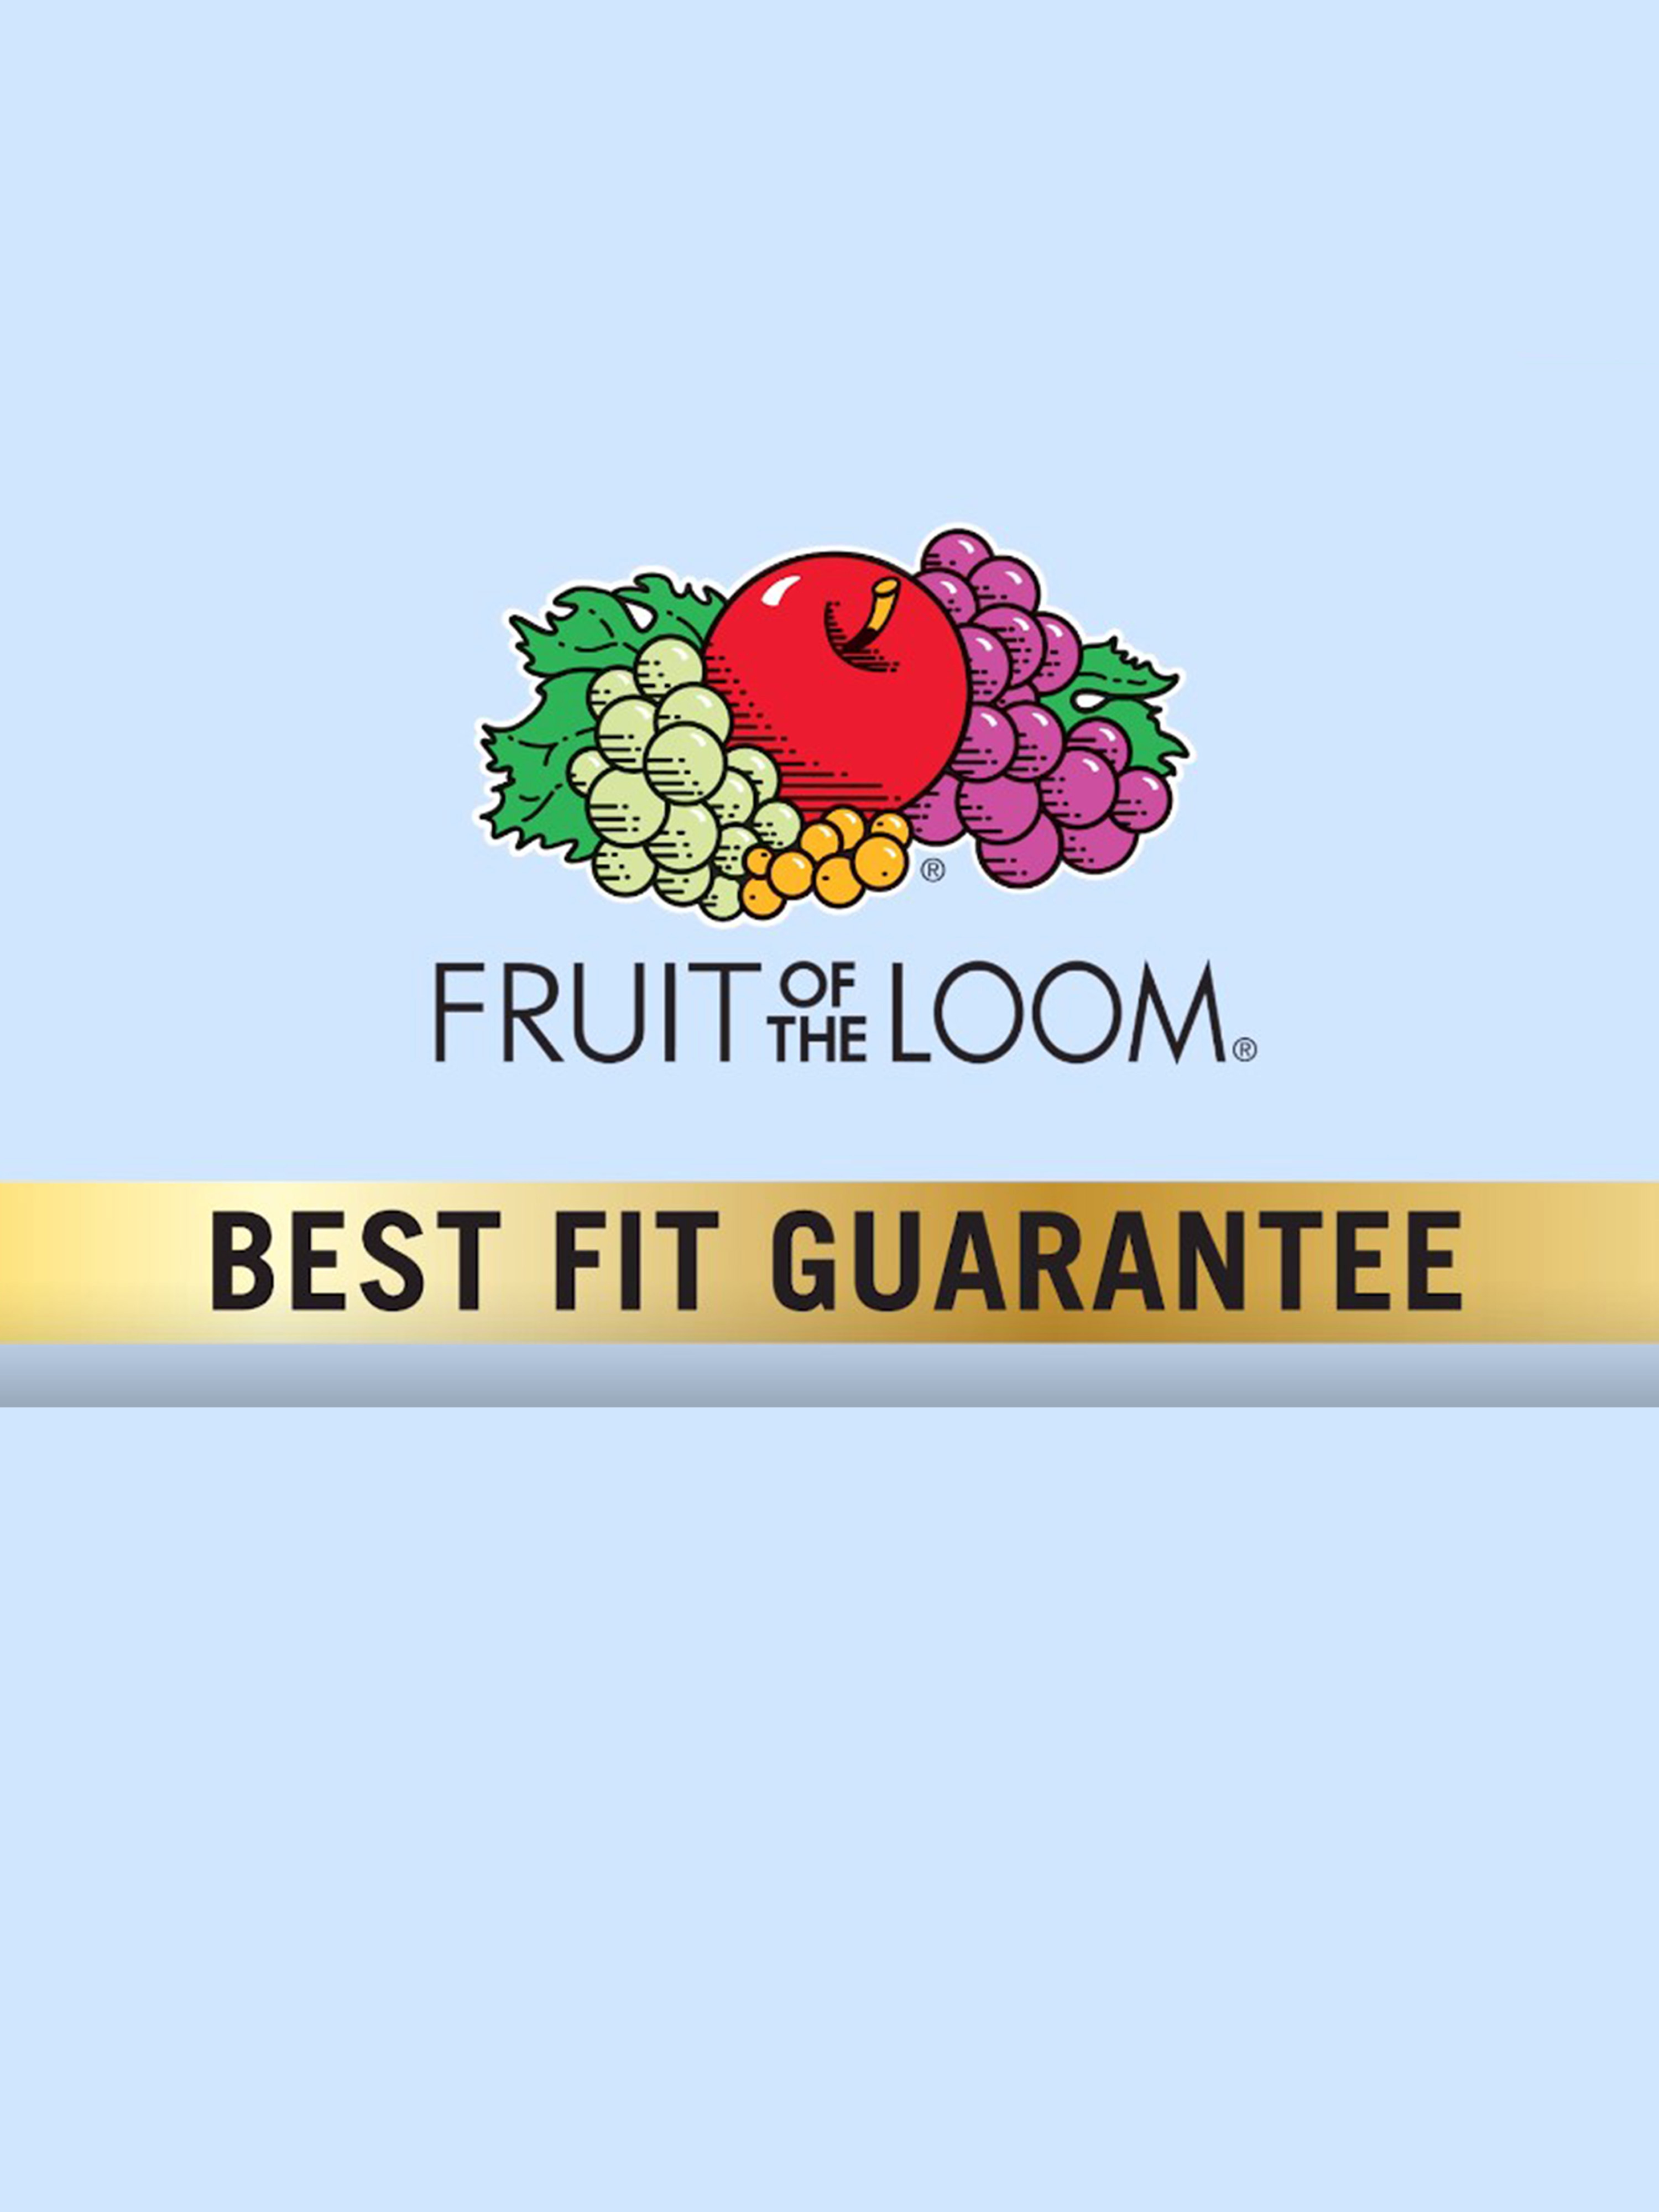 Fruit of the Loom Premium Men's Cotton Briefs, 4 Pack - Assorted